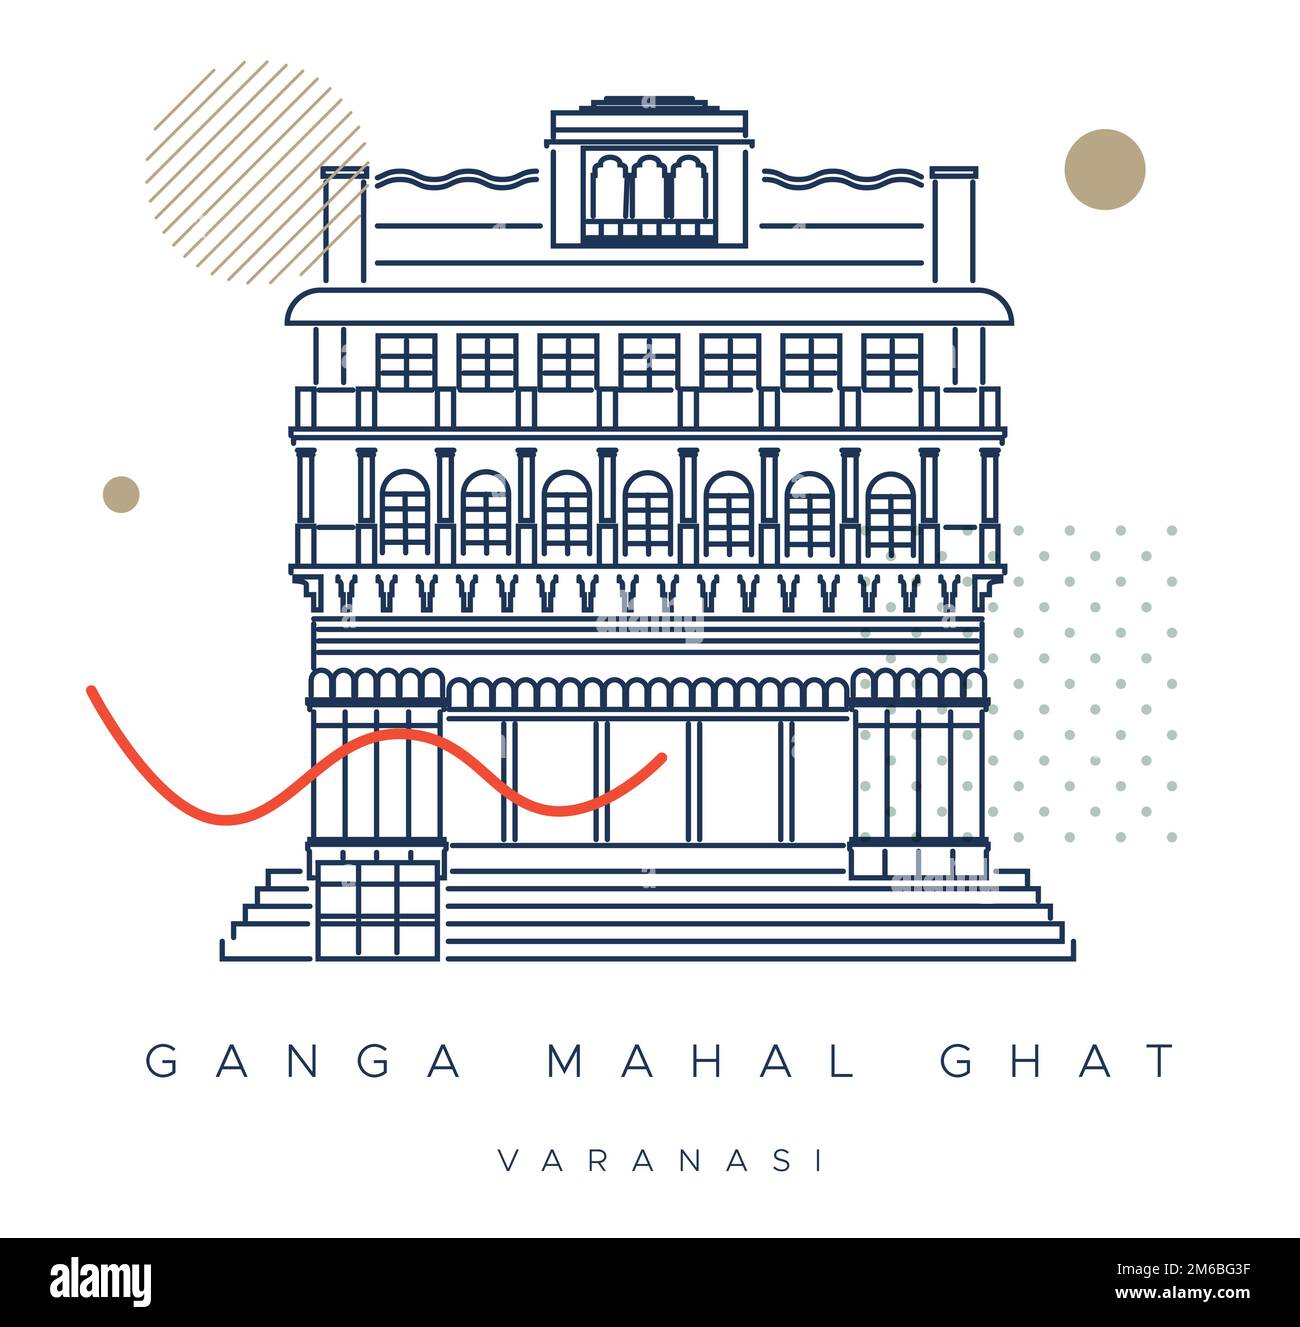 Varanasi City - Ganga Mahal Ghat - Ikone Illustration als EPS 10 Datei Stock Vektor